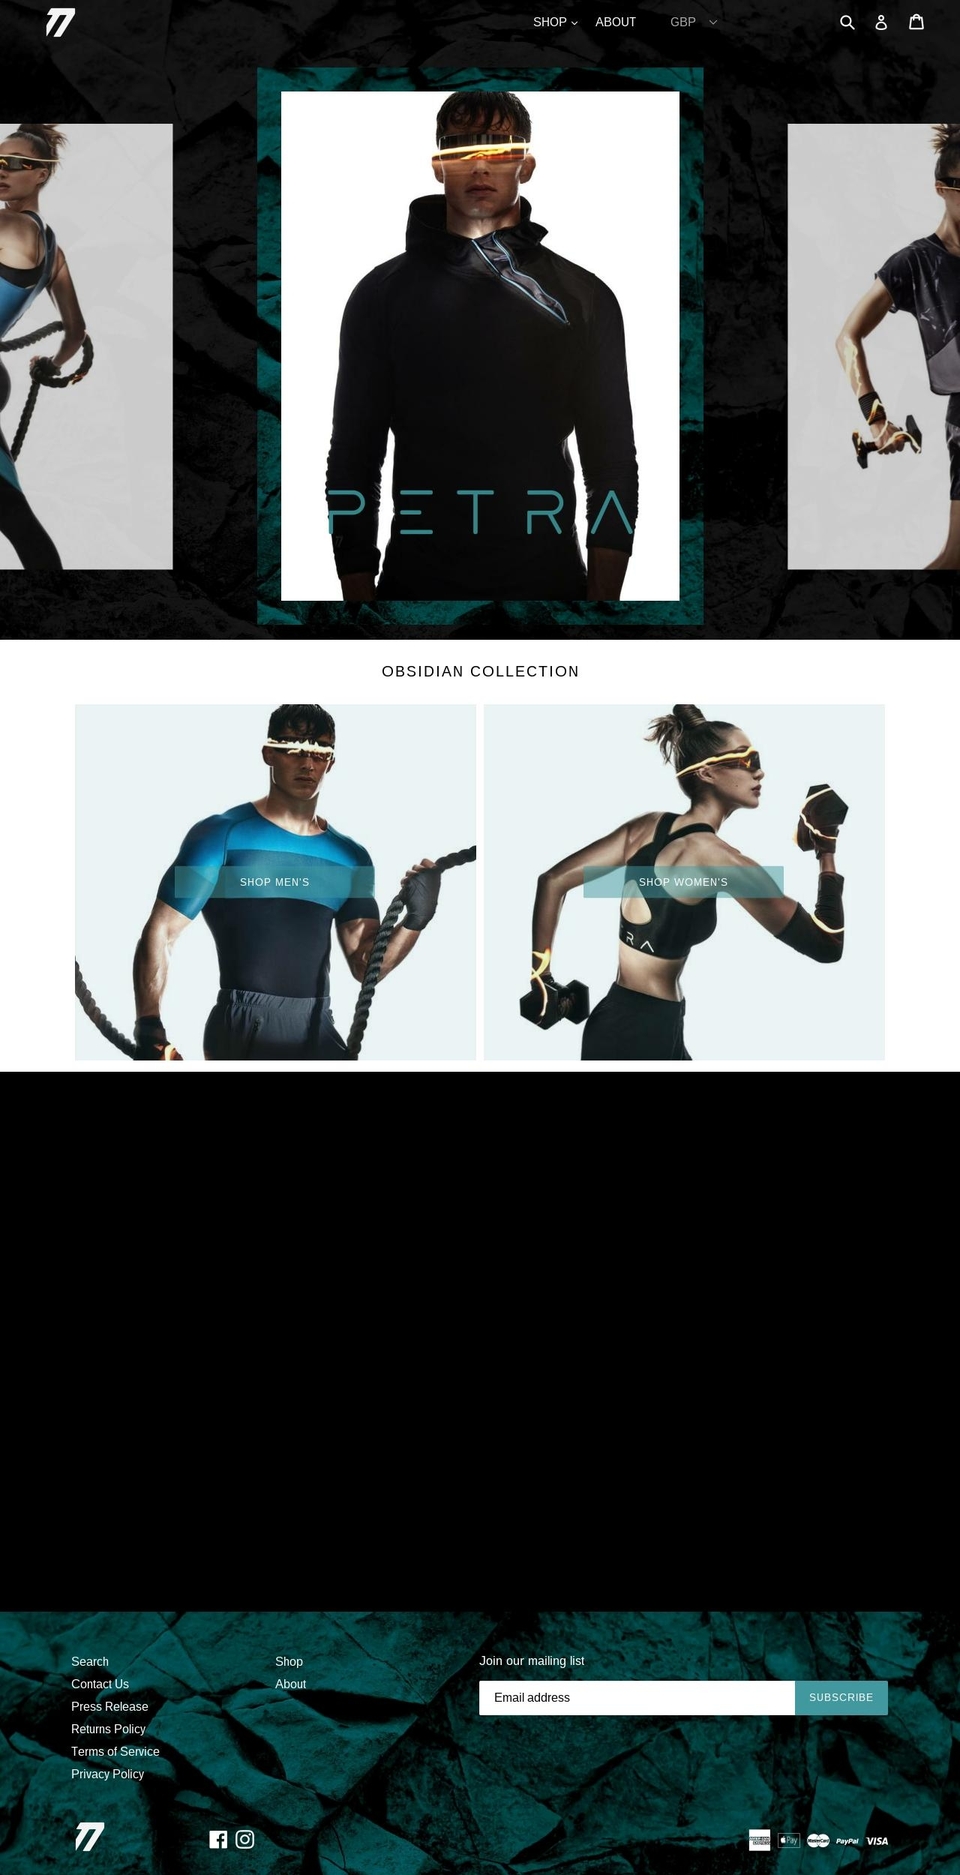 petra.design shopify website screenshot